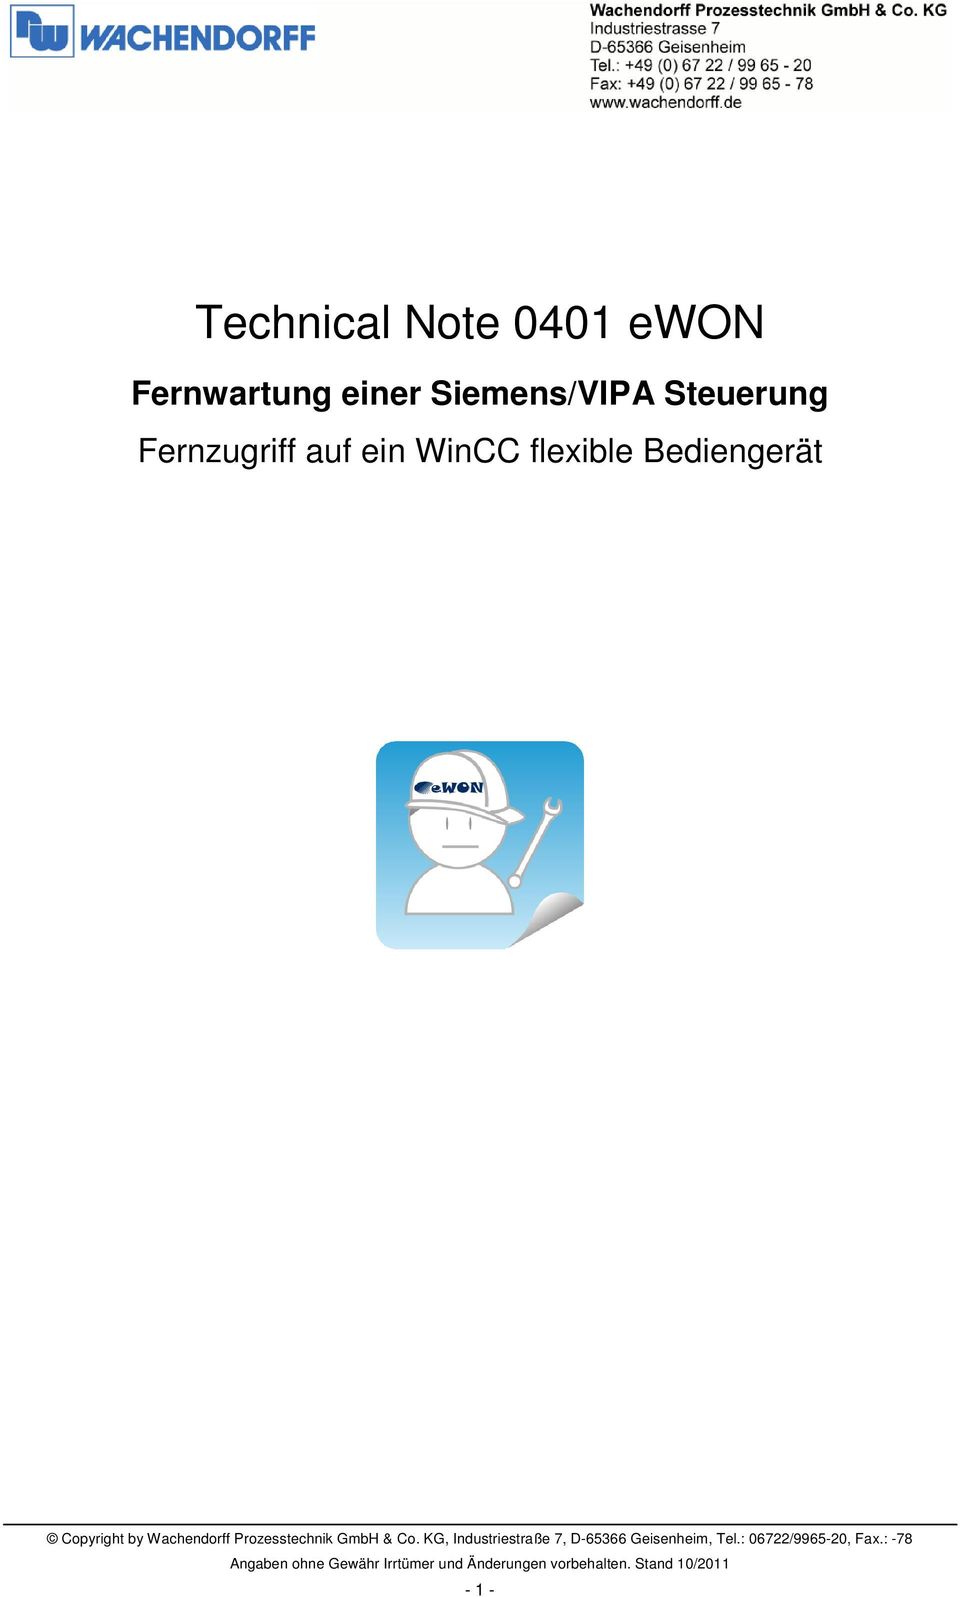 Siemens/VIPA Steuerung